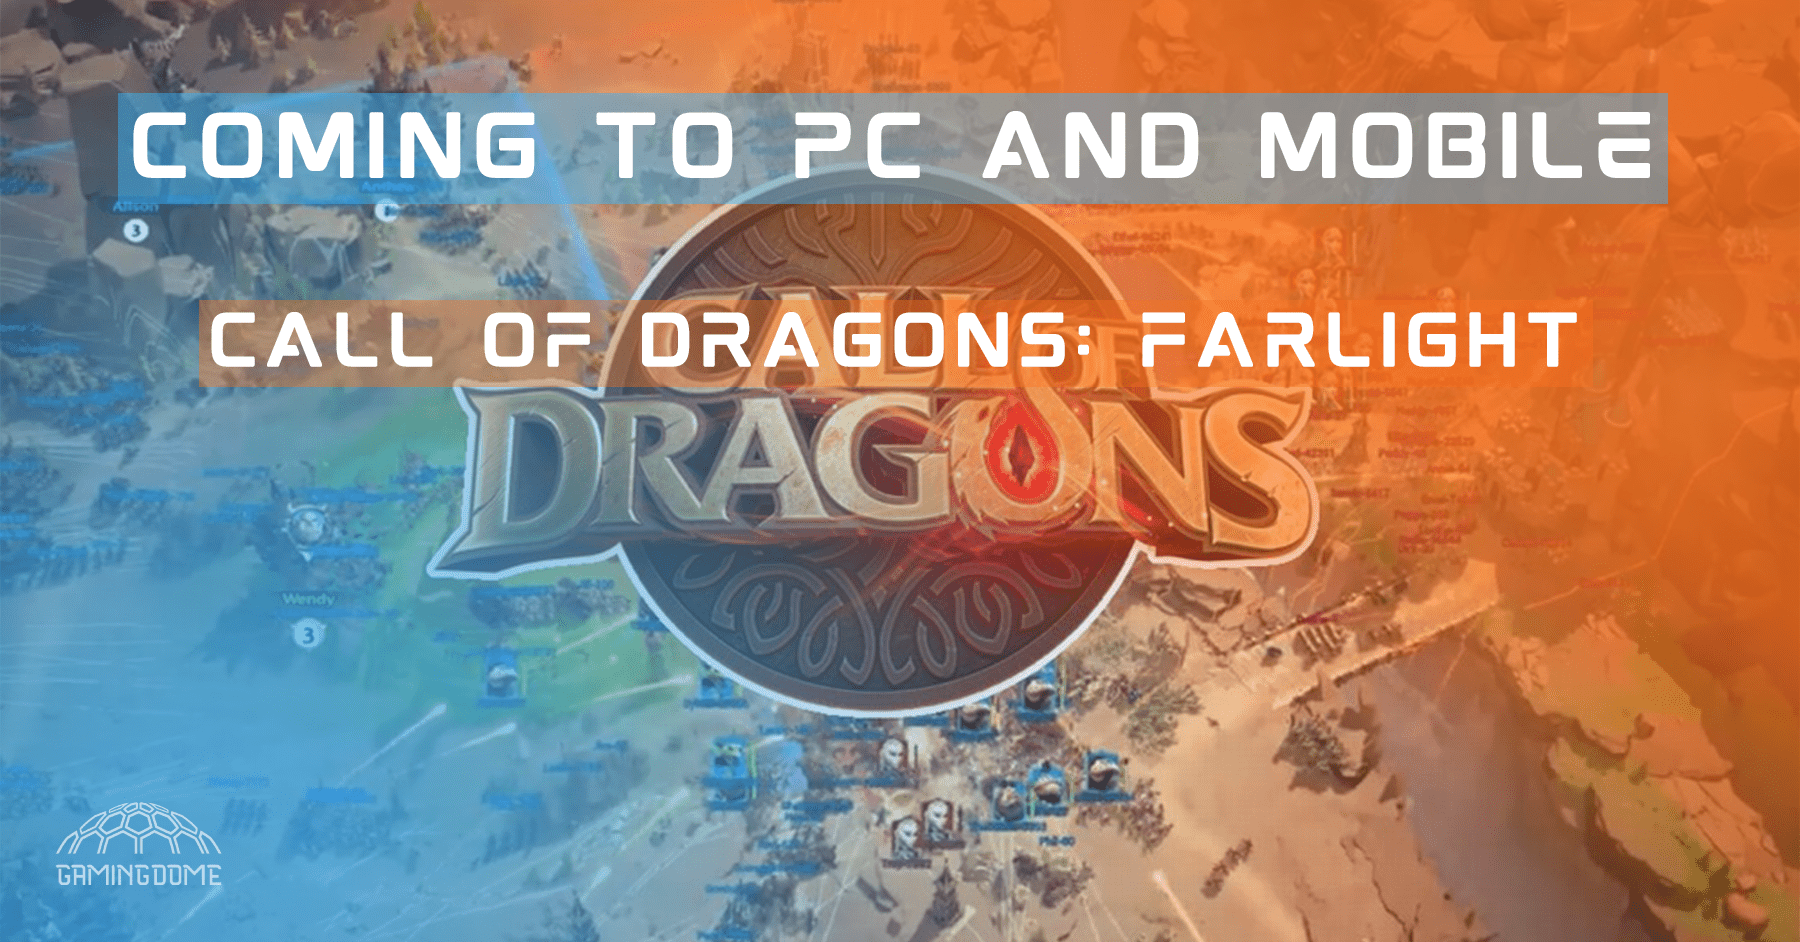 Call of Dragons: Farlight - The Ultimate Fantasy Adventure